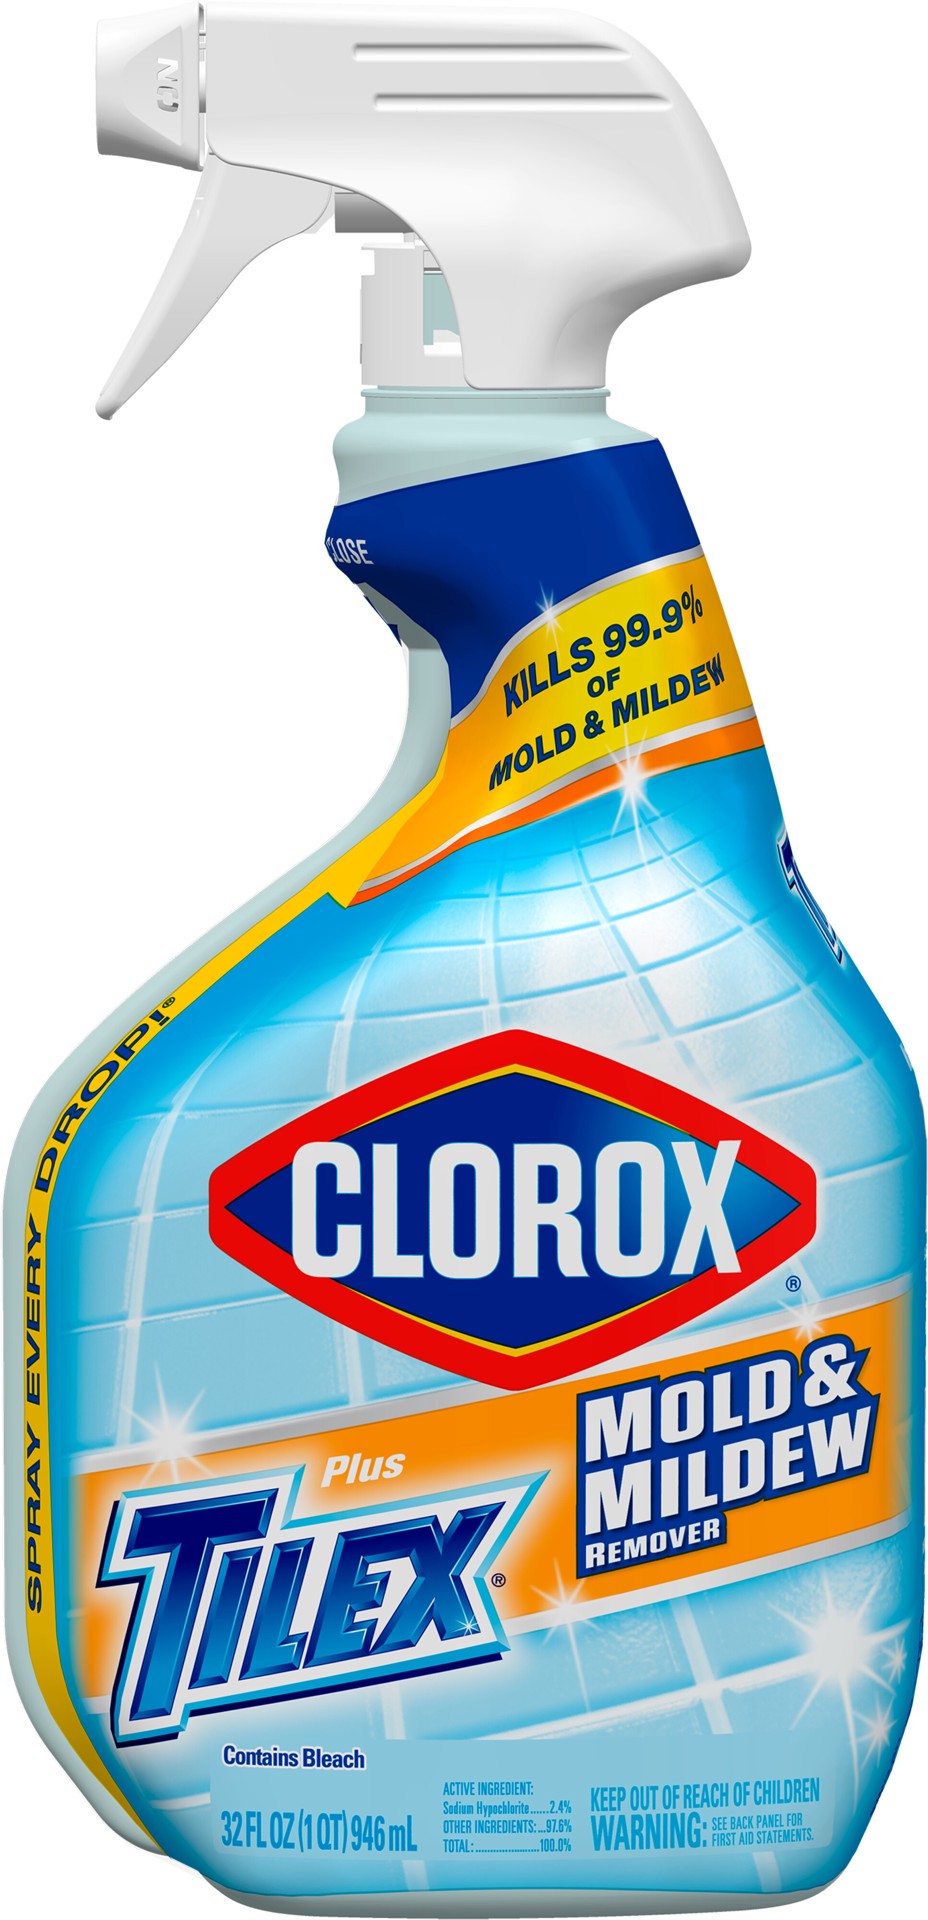 slide 1 of 79, Clorox Plus Tilex Mold & Mildew Remover 32 fl oz, 32 fl oz